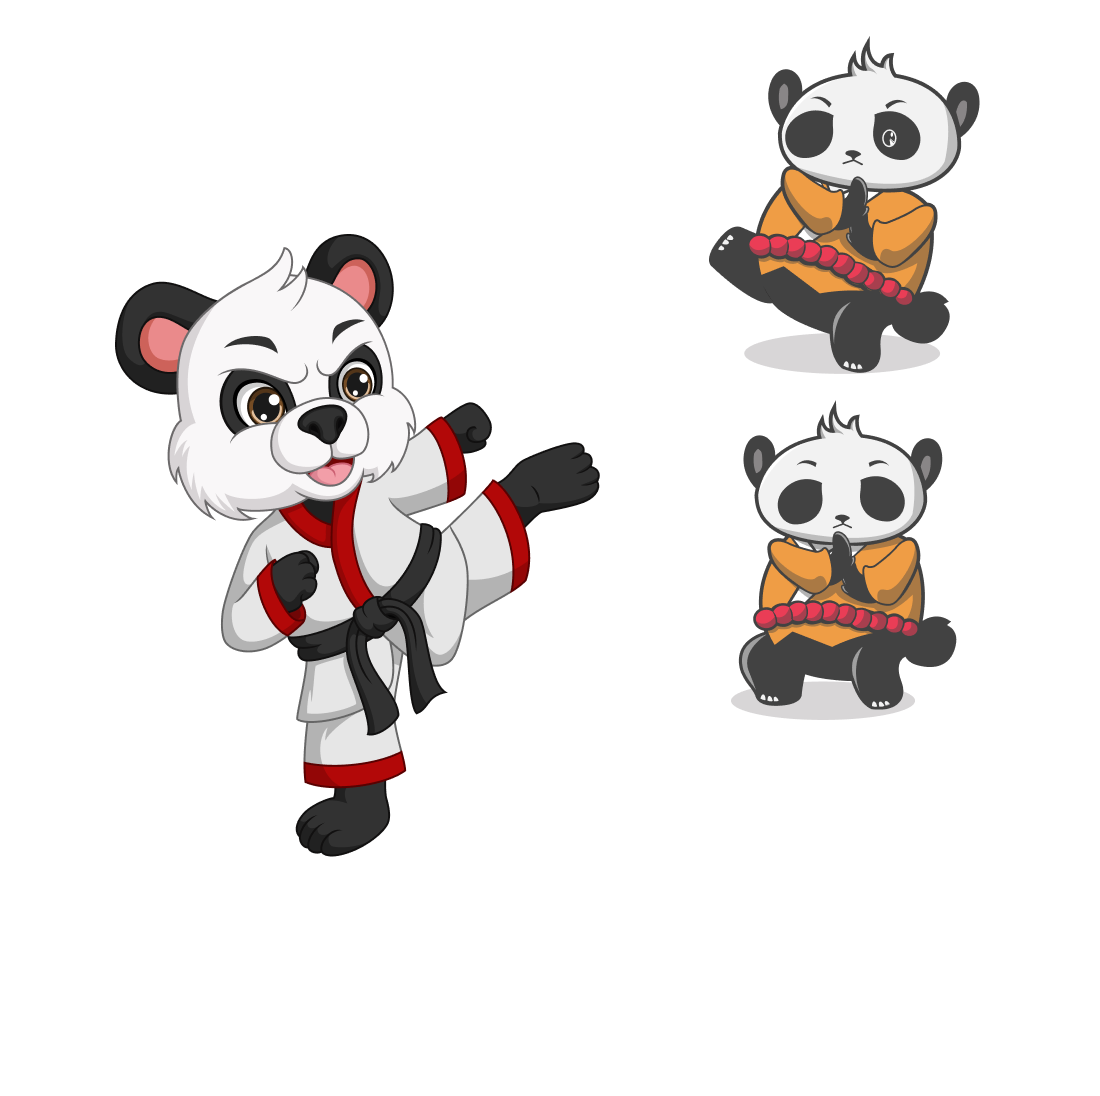 Panda bear is doing karate moves.